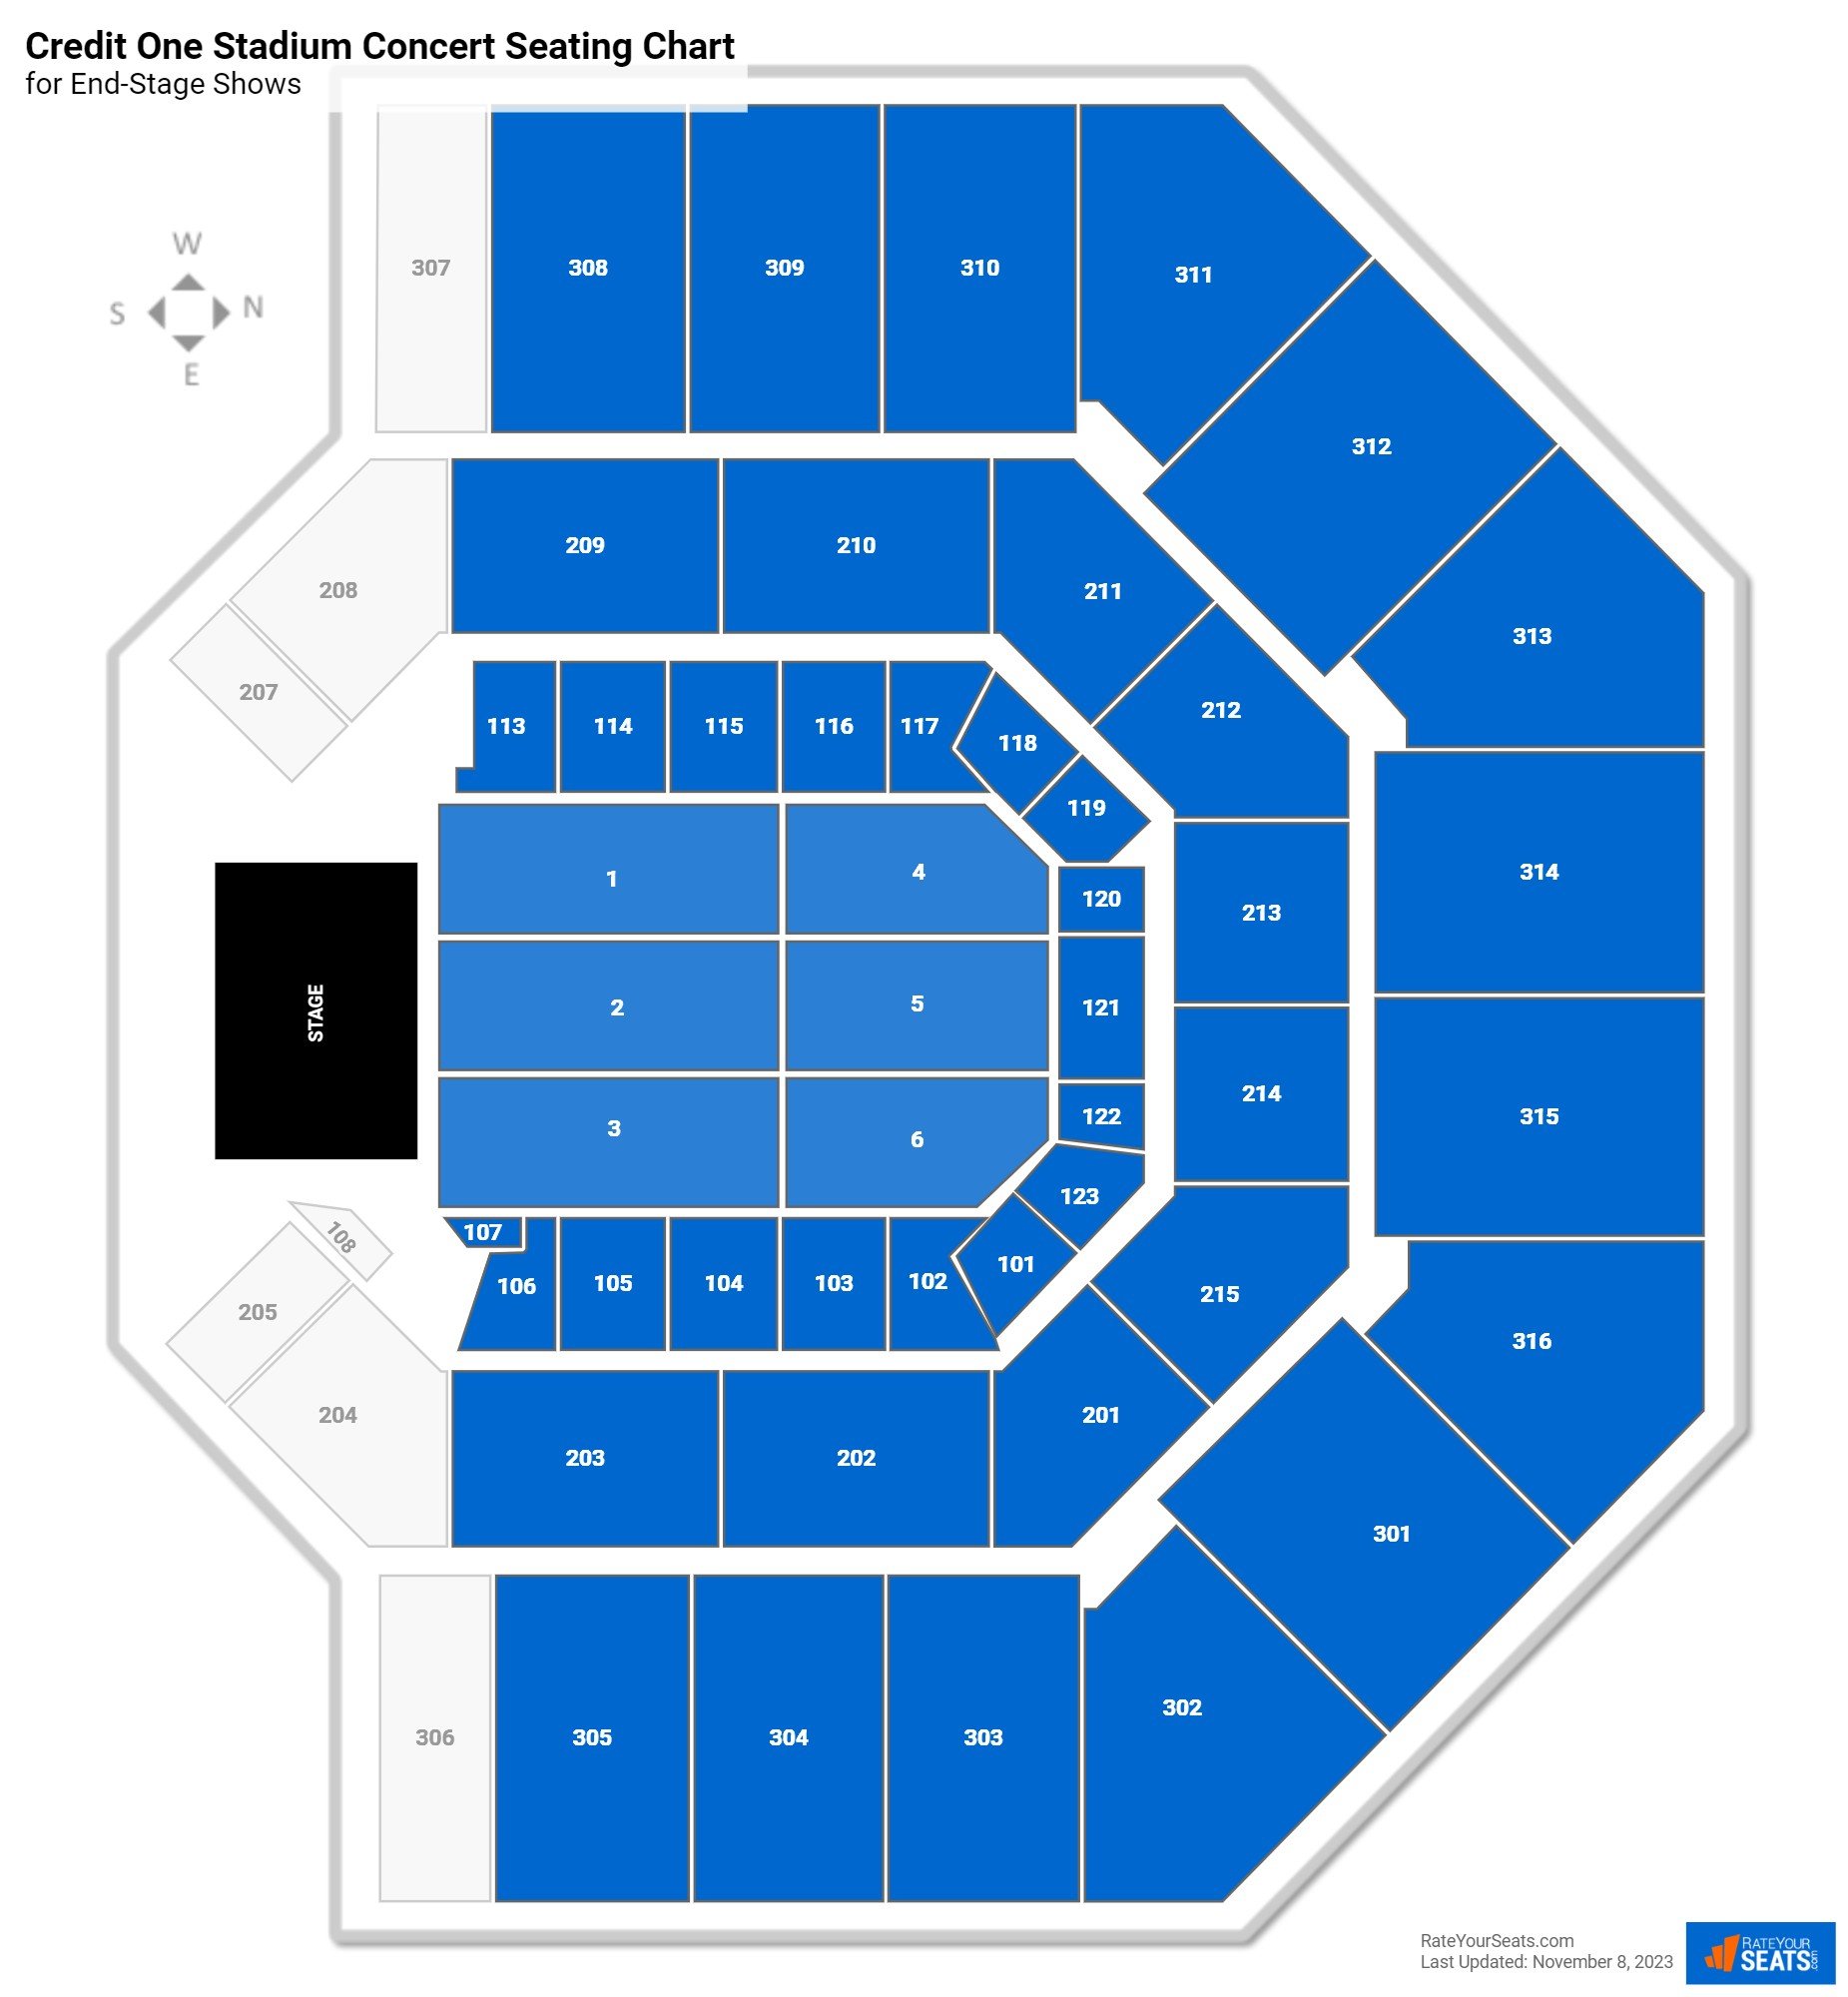 Credit One Stadium Concert Seating Chart